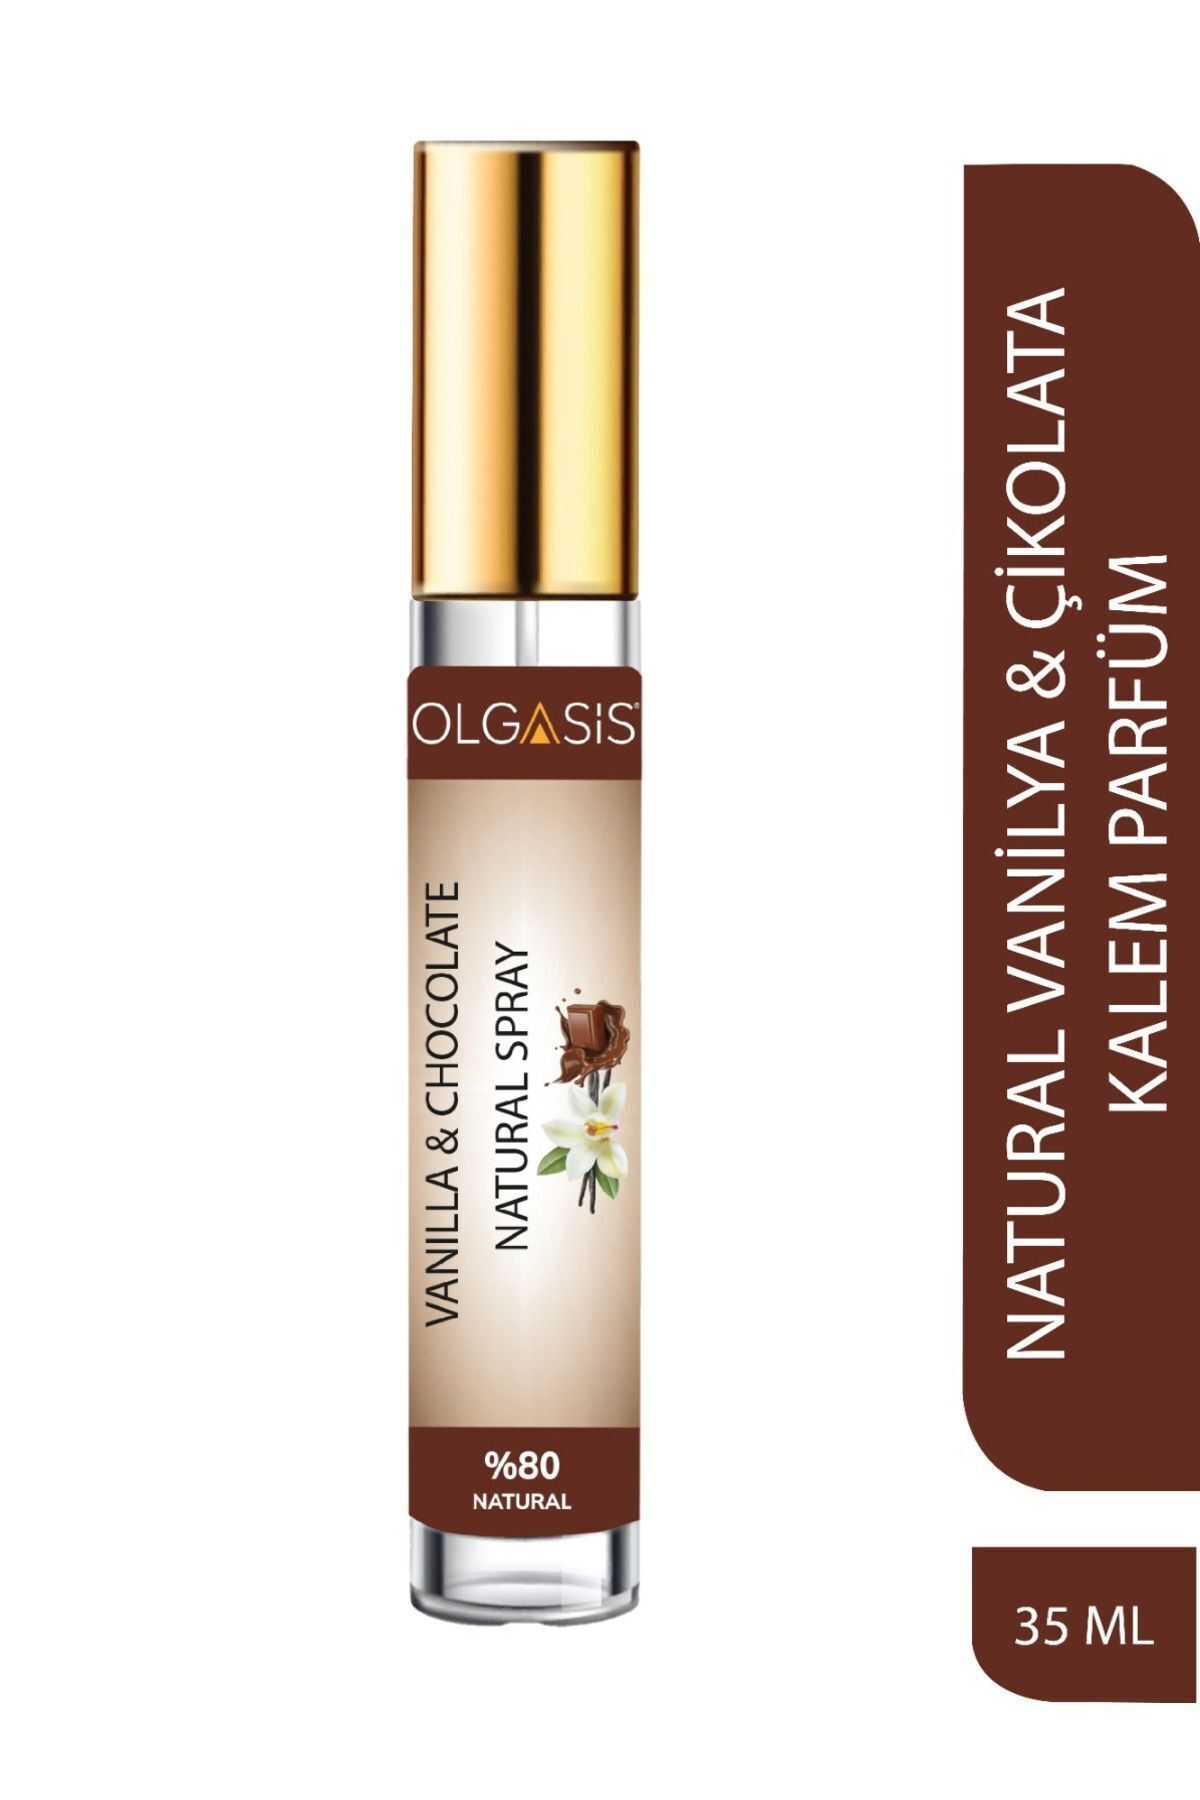 Olgasis Vanilla & Chocolatte Natural Spray %80 Natural Vanilya & Çikolata Kalem Parfüm 35 Ml Pen Parfume